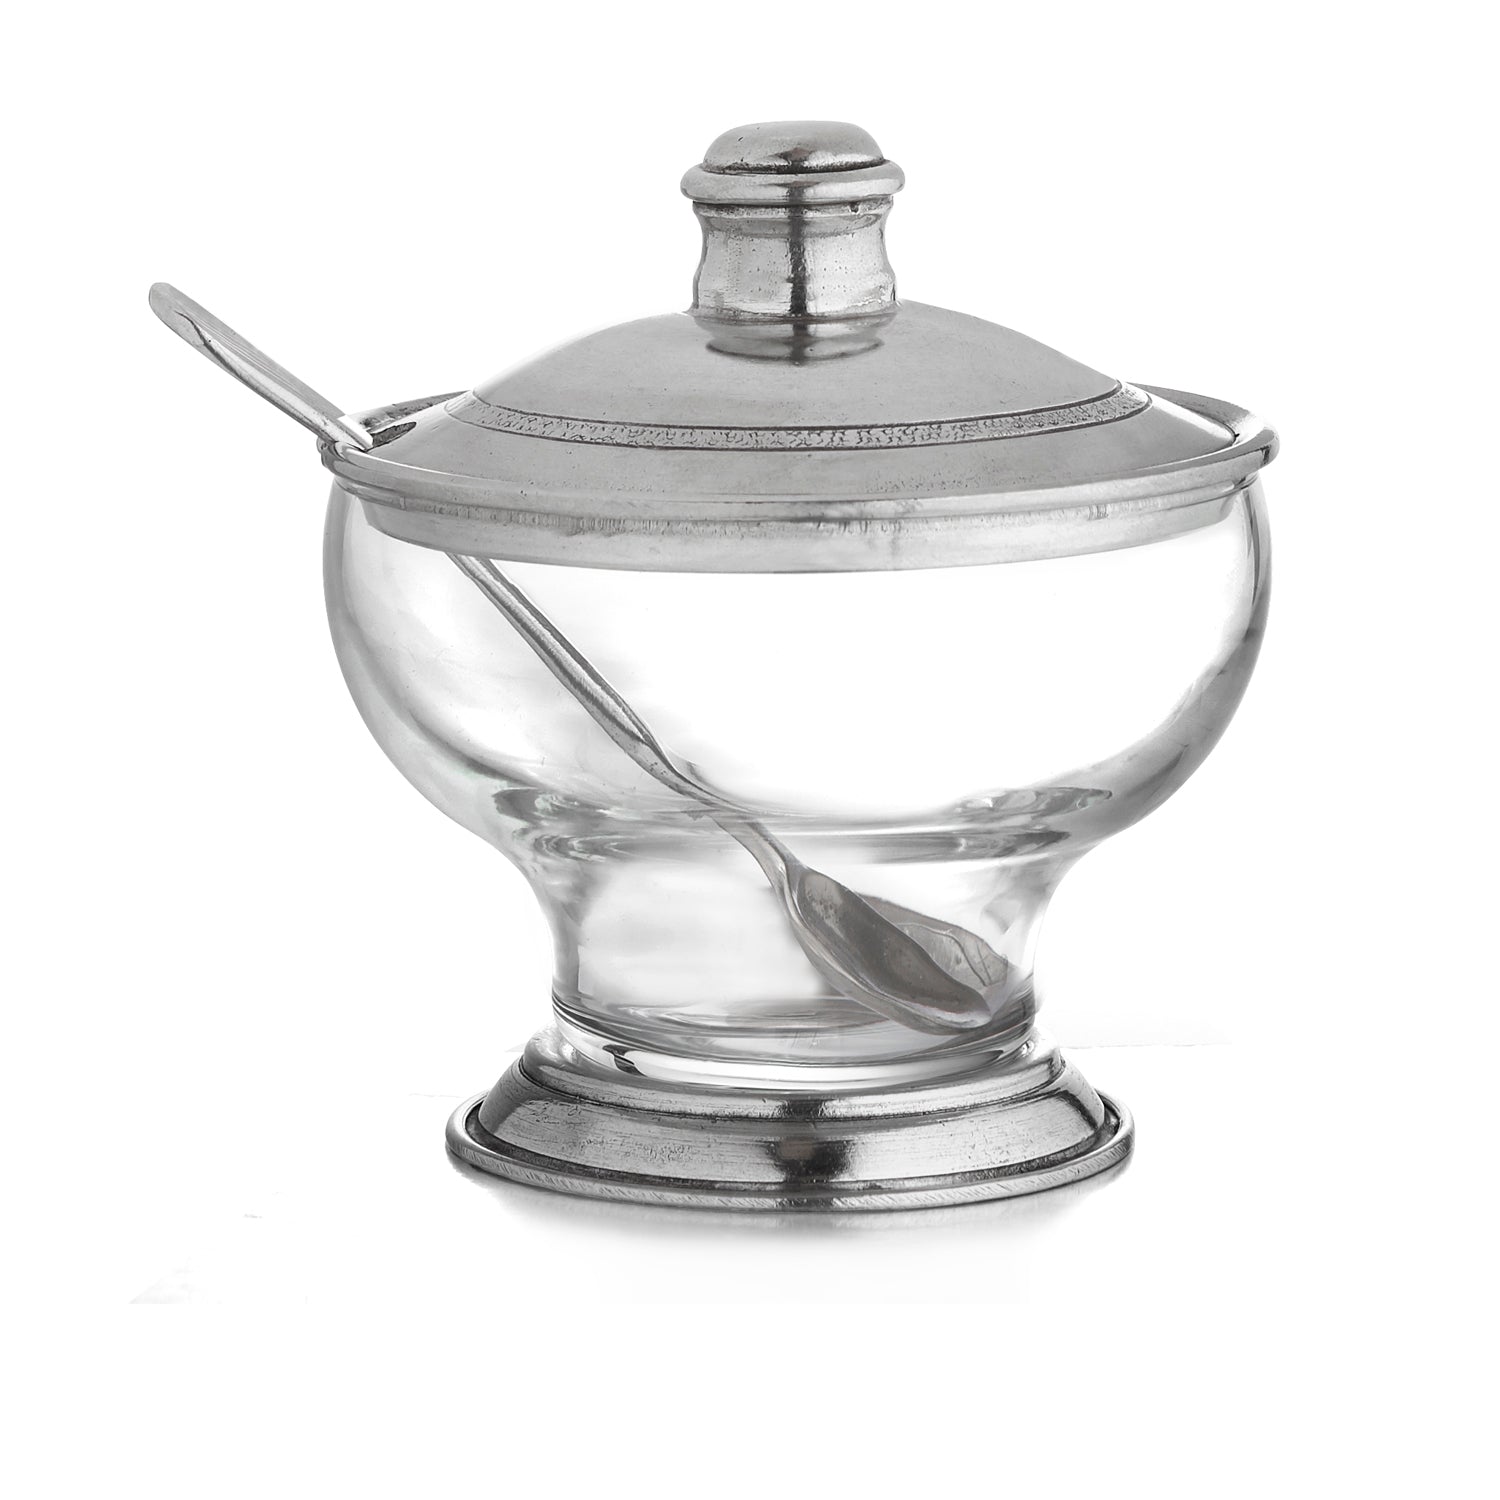 Arte Italica Tavola Covered Bowl with Spoon